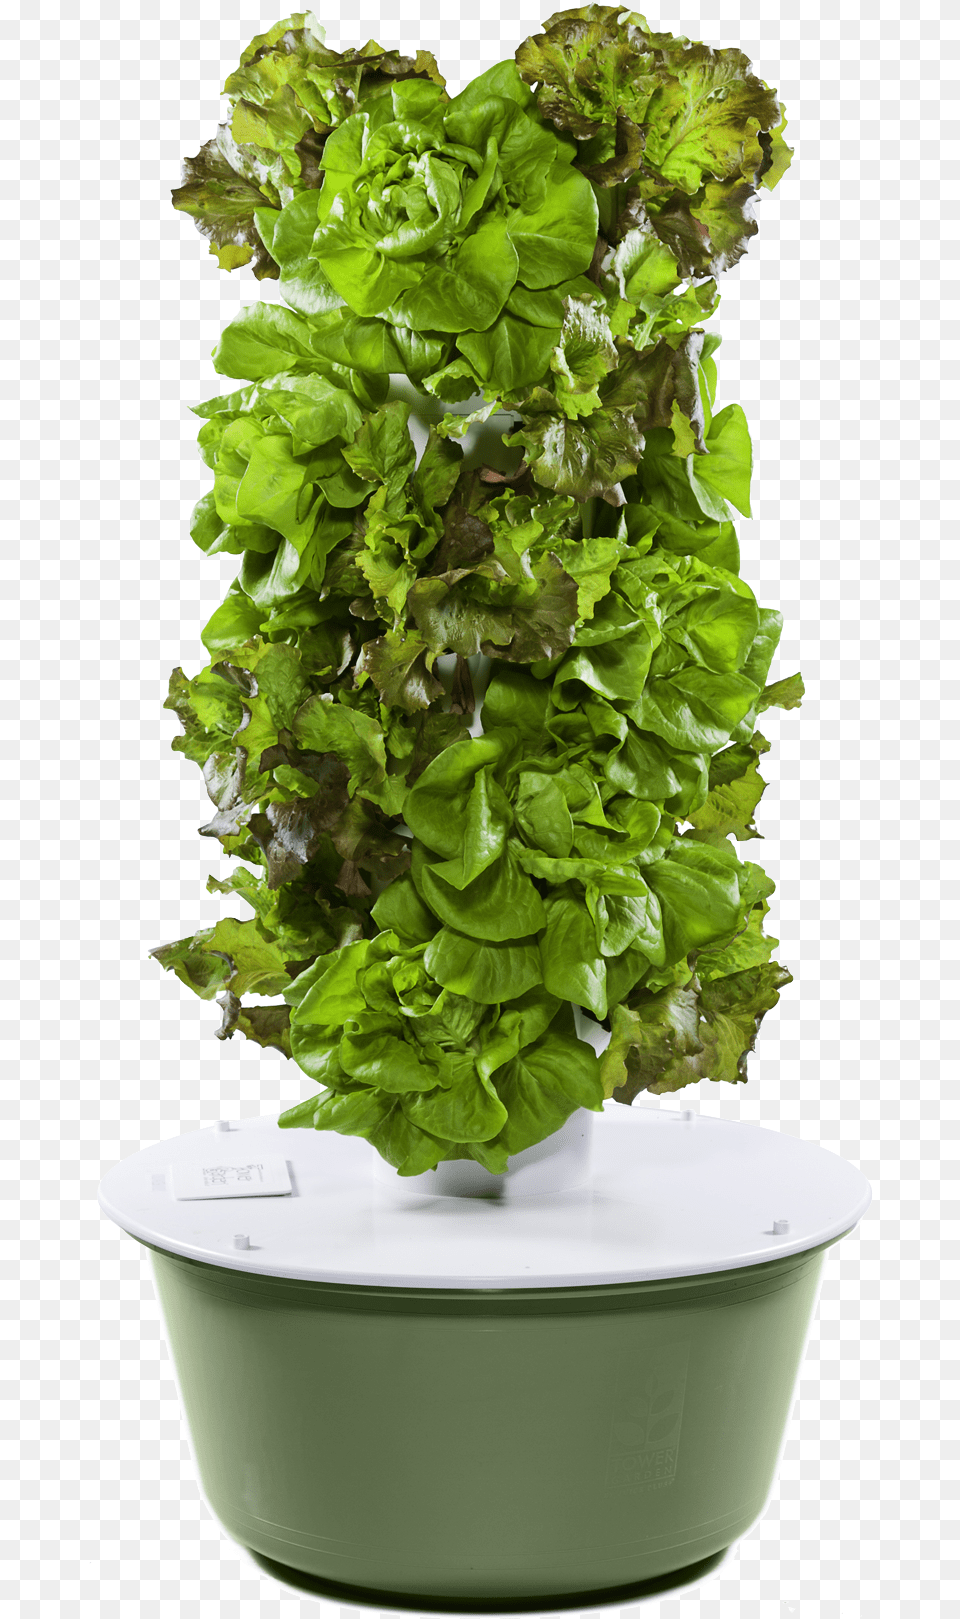 Jliba Towergarden Com Tower Garden, Food, Lettuce, Plant, Produce Png Image